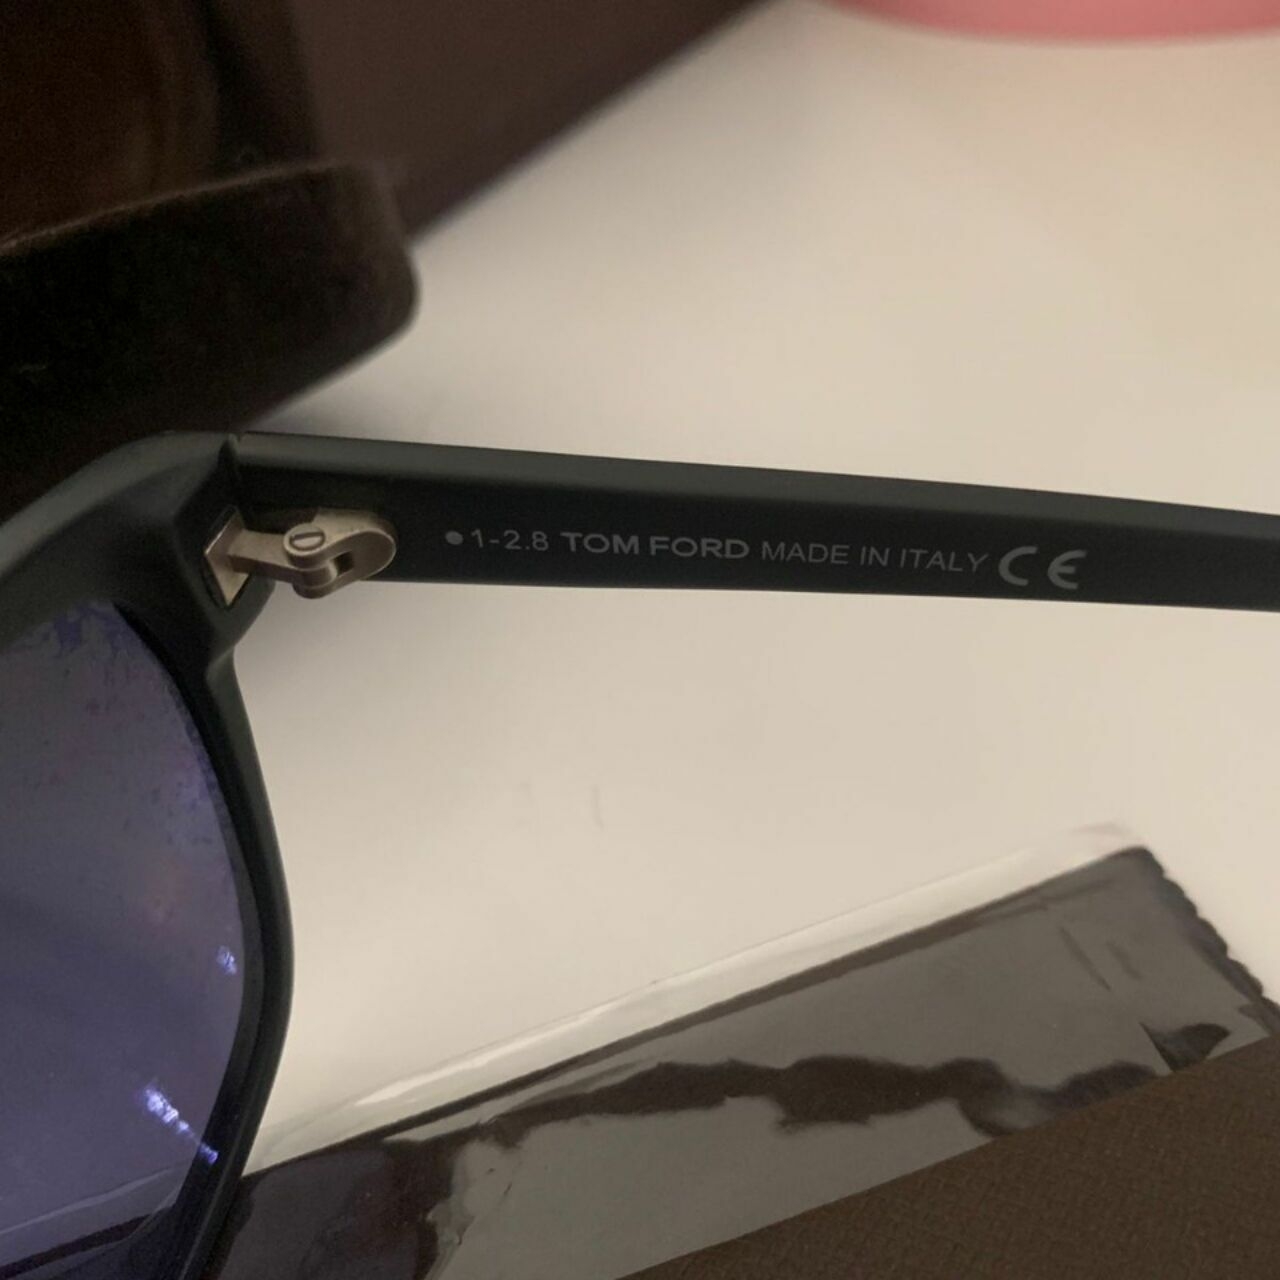 Tom Ford Sunglasses Black 32013 Longarone Unisex 